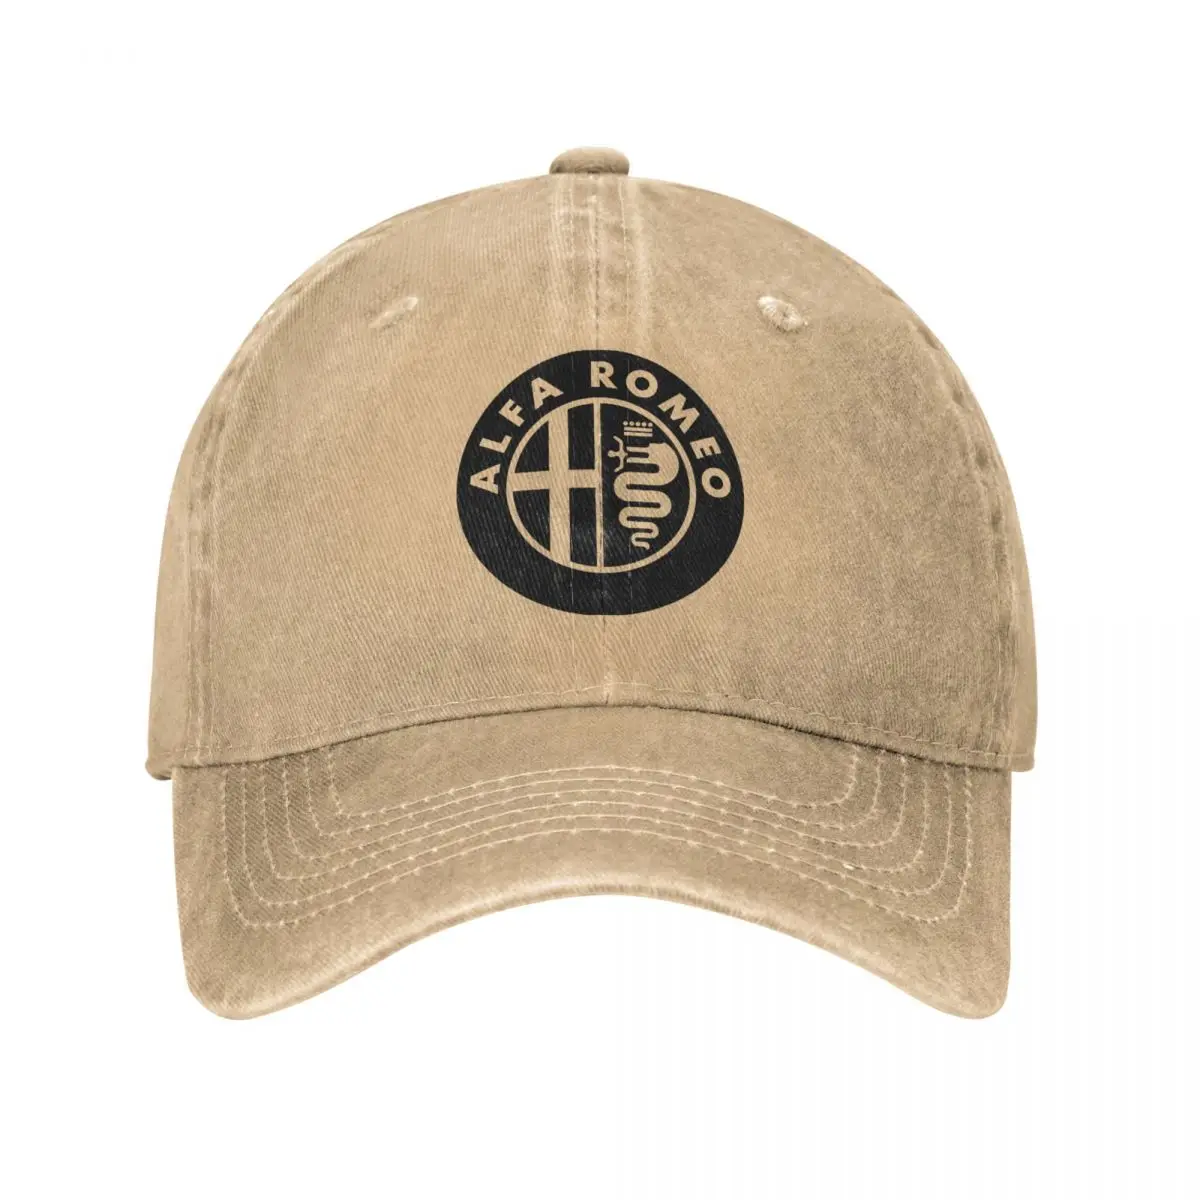 

Alfa - Romeo Baseball Cap Vintage Distressed Denim Snapback Cap Men Women Outdoor All Seasons Travel Hats Cap